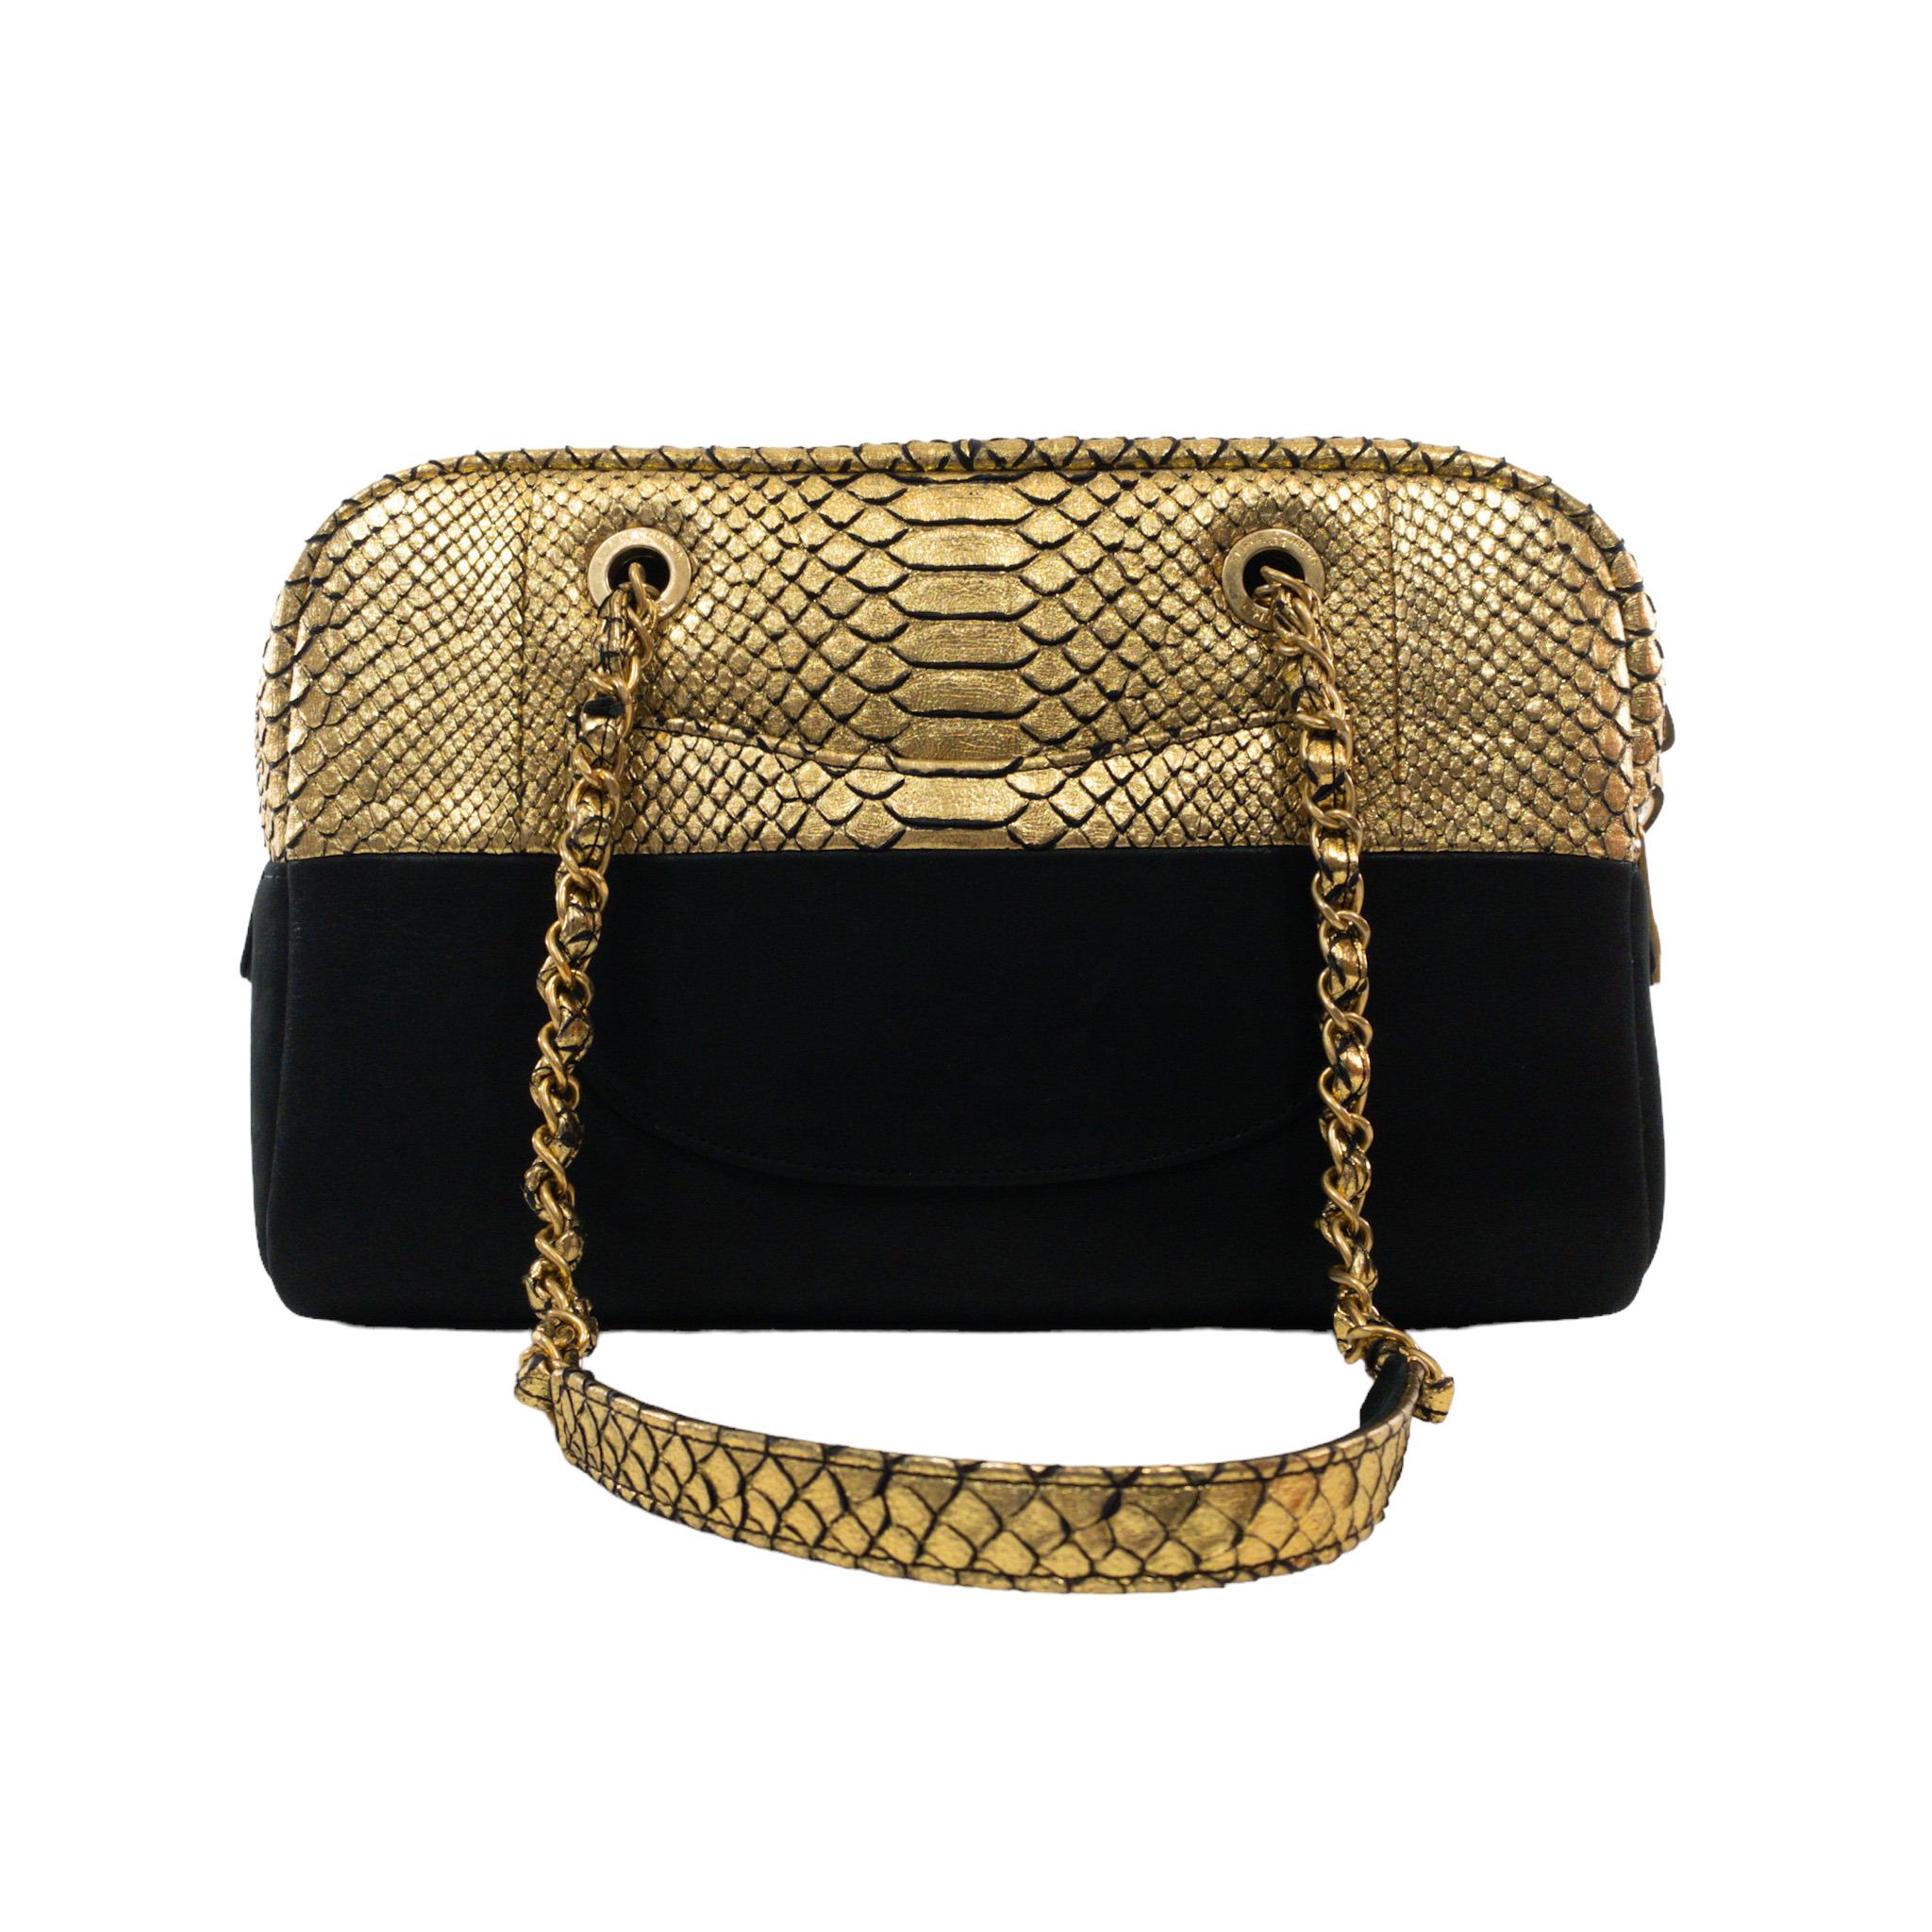 Chanel Green and Brown Python Snakeskin Cerf Tote Handbag